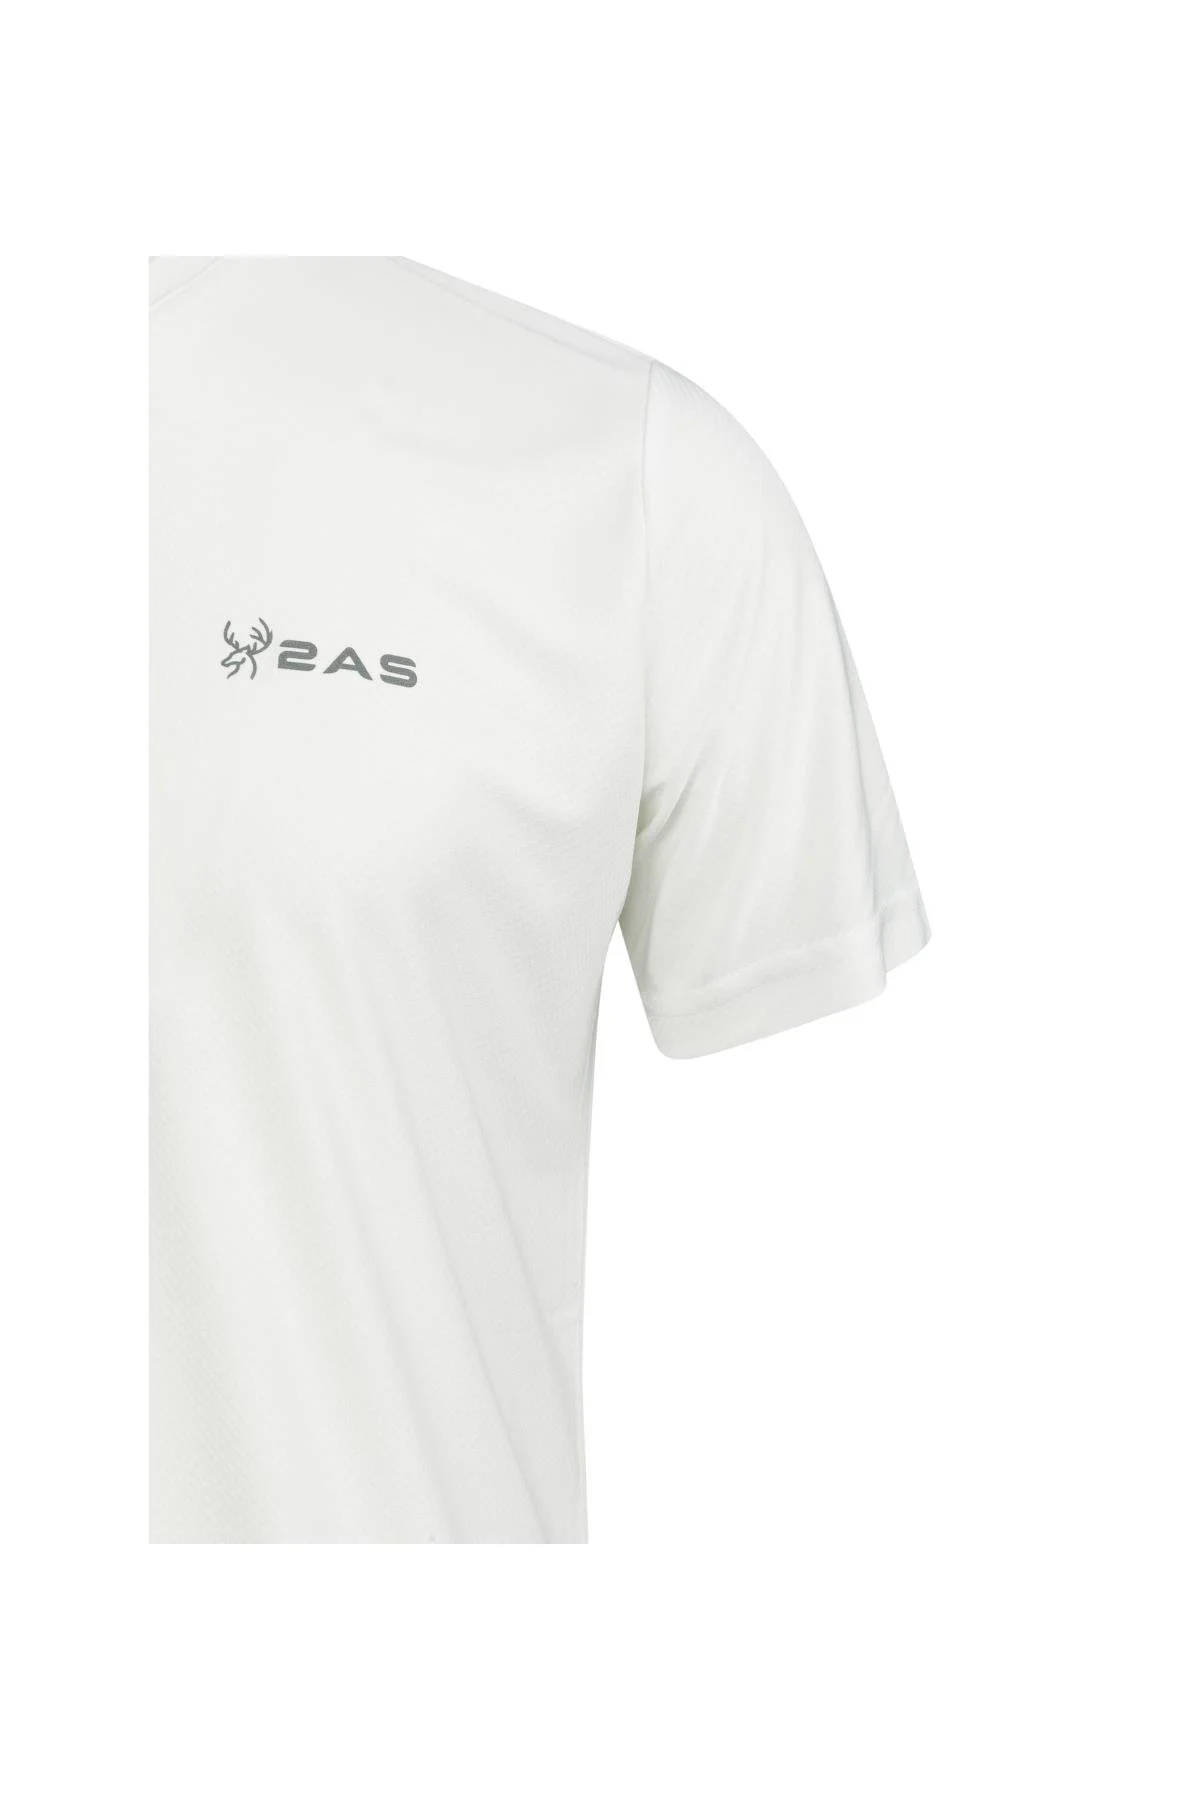 2AS Elba V Yaka T-shirt Beyaz - 3